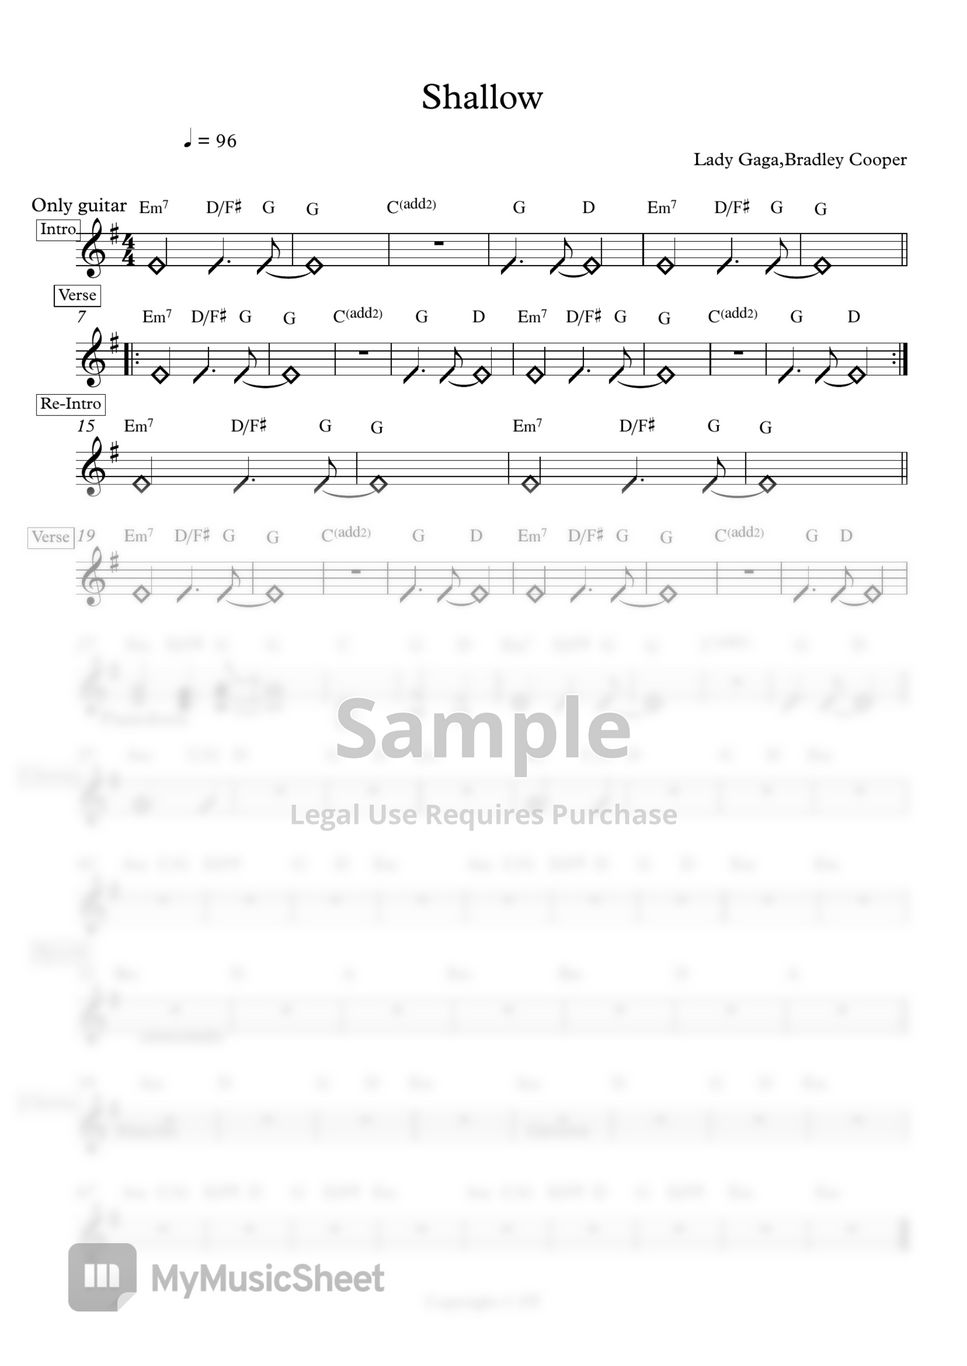 Lady Gaga - Shallow (spartito accordi) by Francesco Piantoni